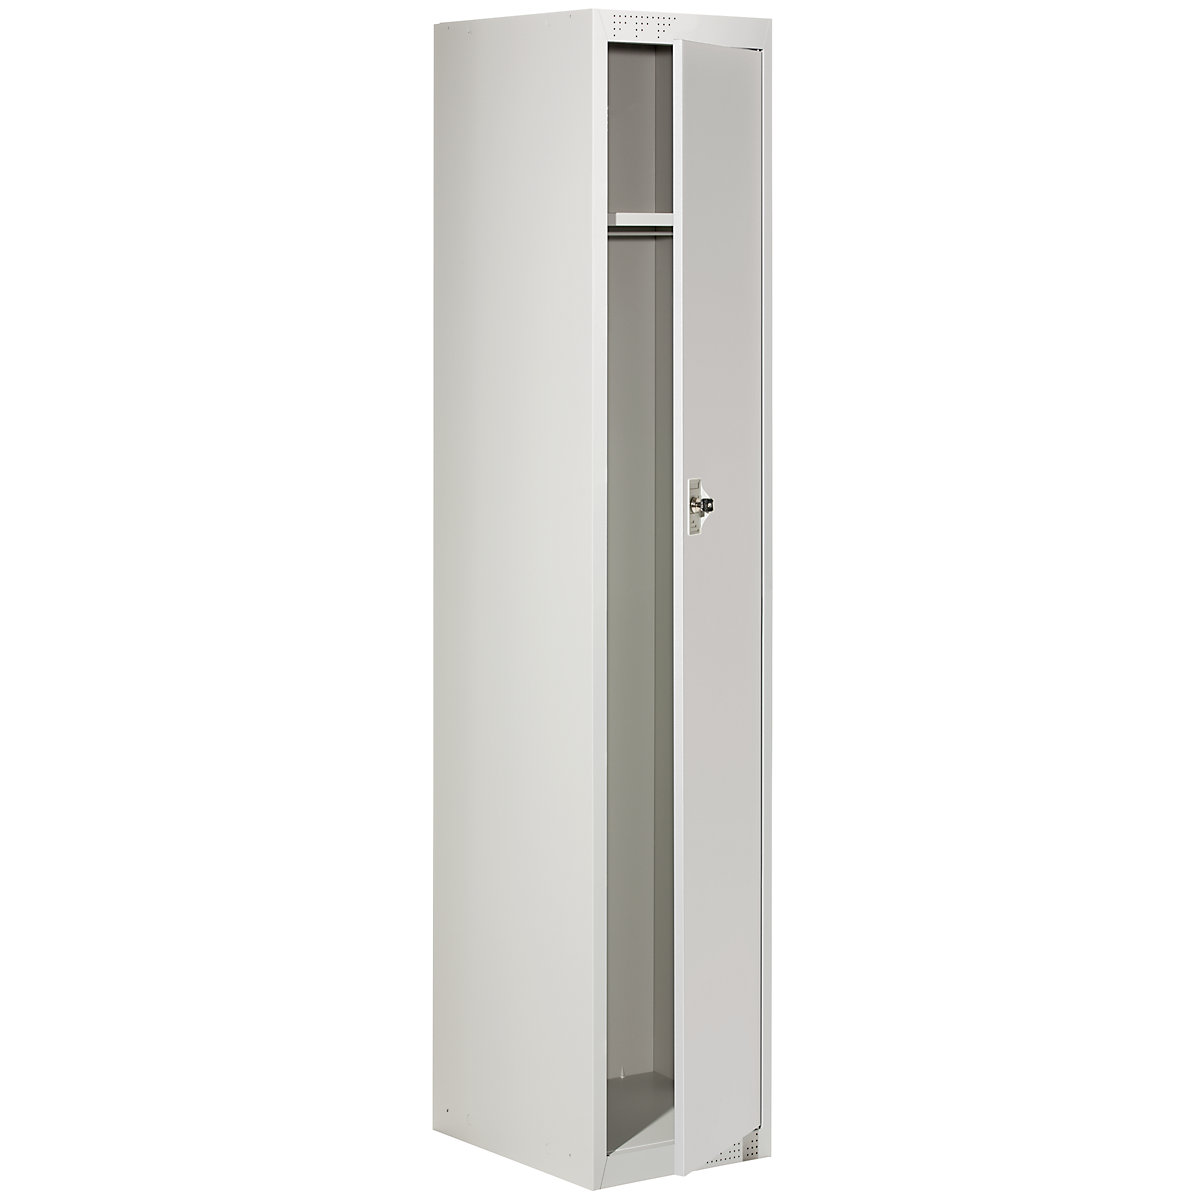 Cloakroom locker system – eurokraft basic, with standard and extension modules, HxWxD 1800 x 300 x 500 mm, 1 hat shelf, 1 clothes rail, light grey, standard unit-4